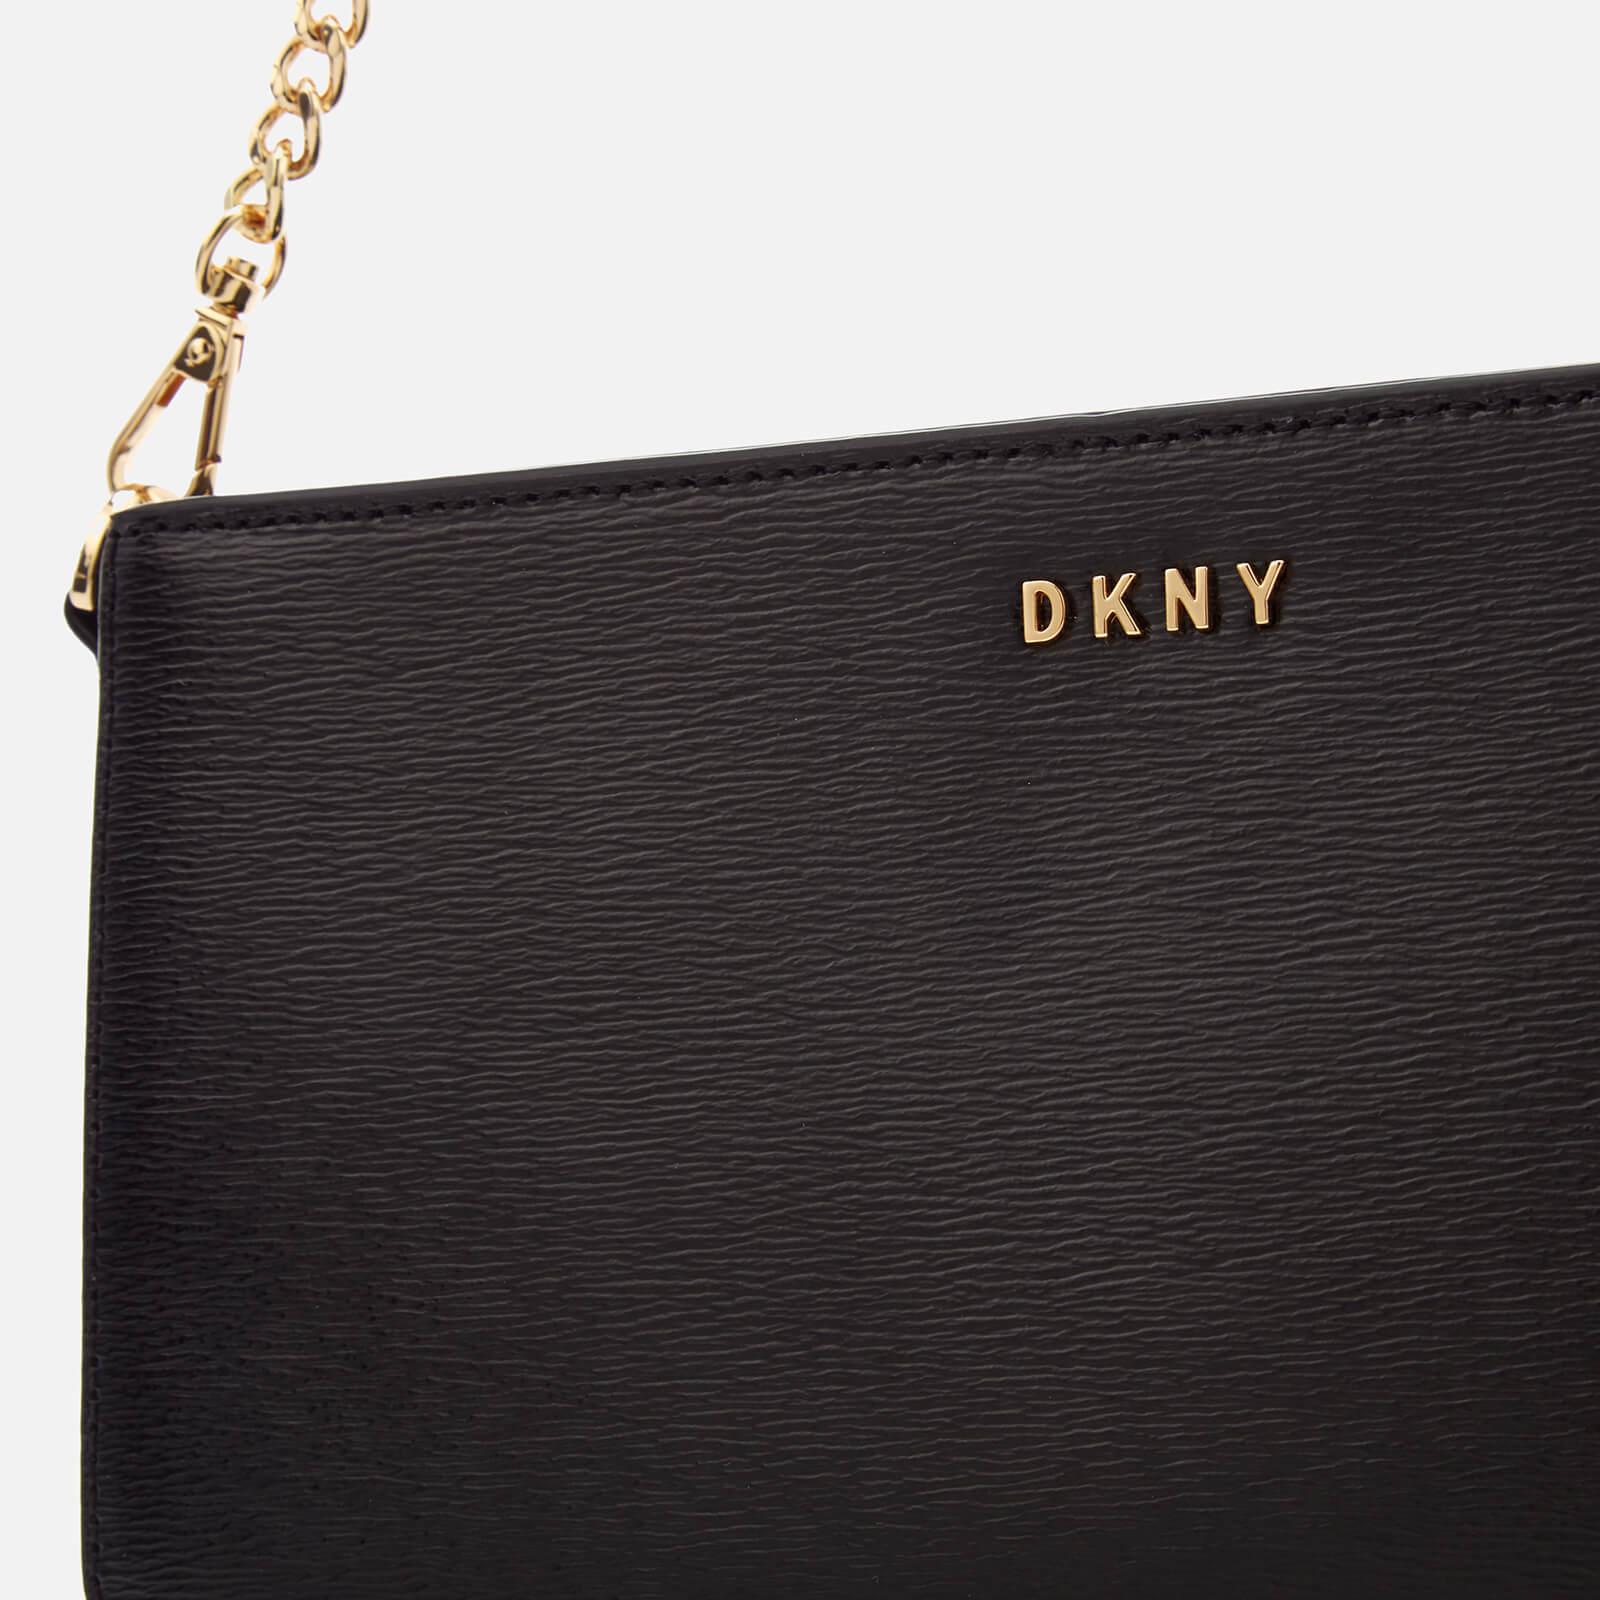 Donna Karan DKNY Bryant Demi Crossbody Bag in Burgundy Leather